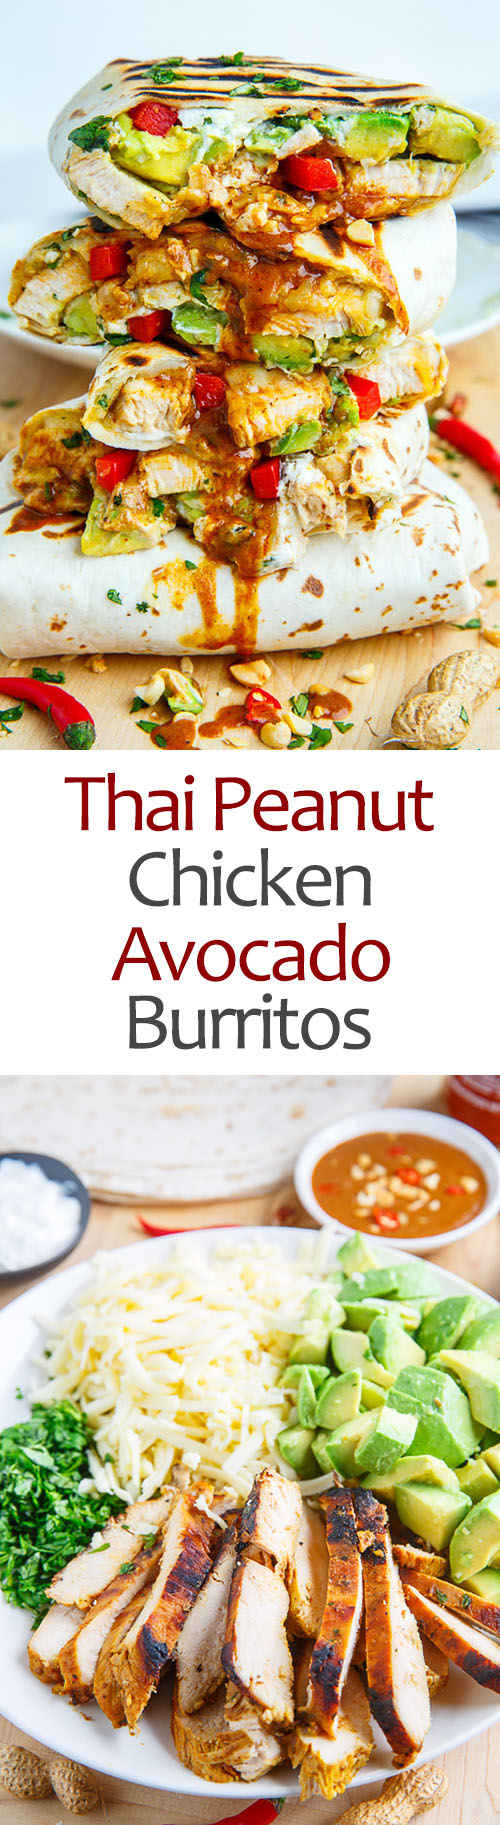 Thai Peanut Chicken Avocado Burritos